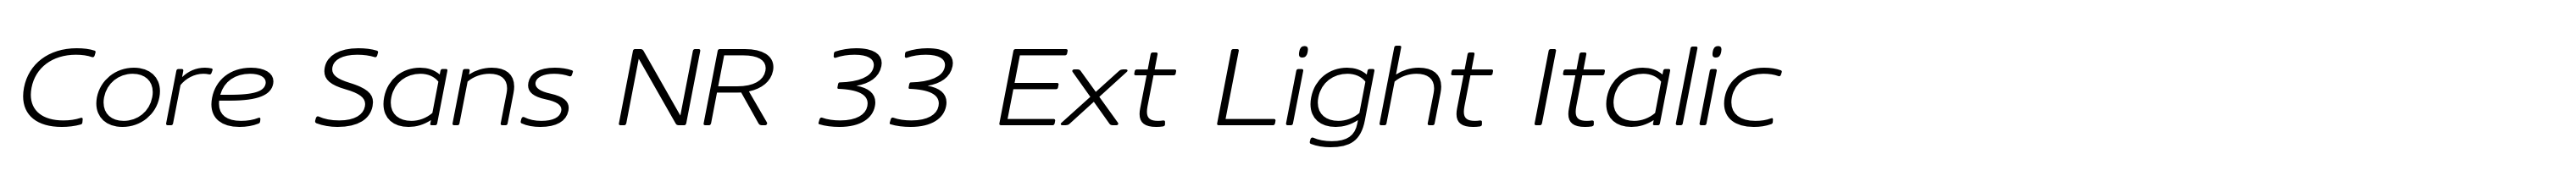 Core Sans NR 33 Ext Light Italic